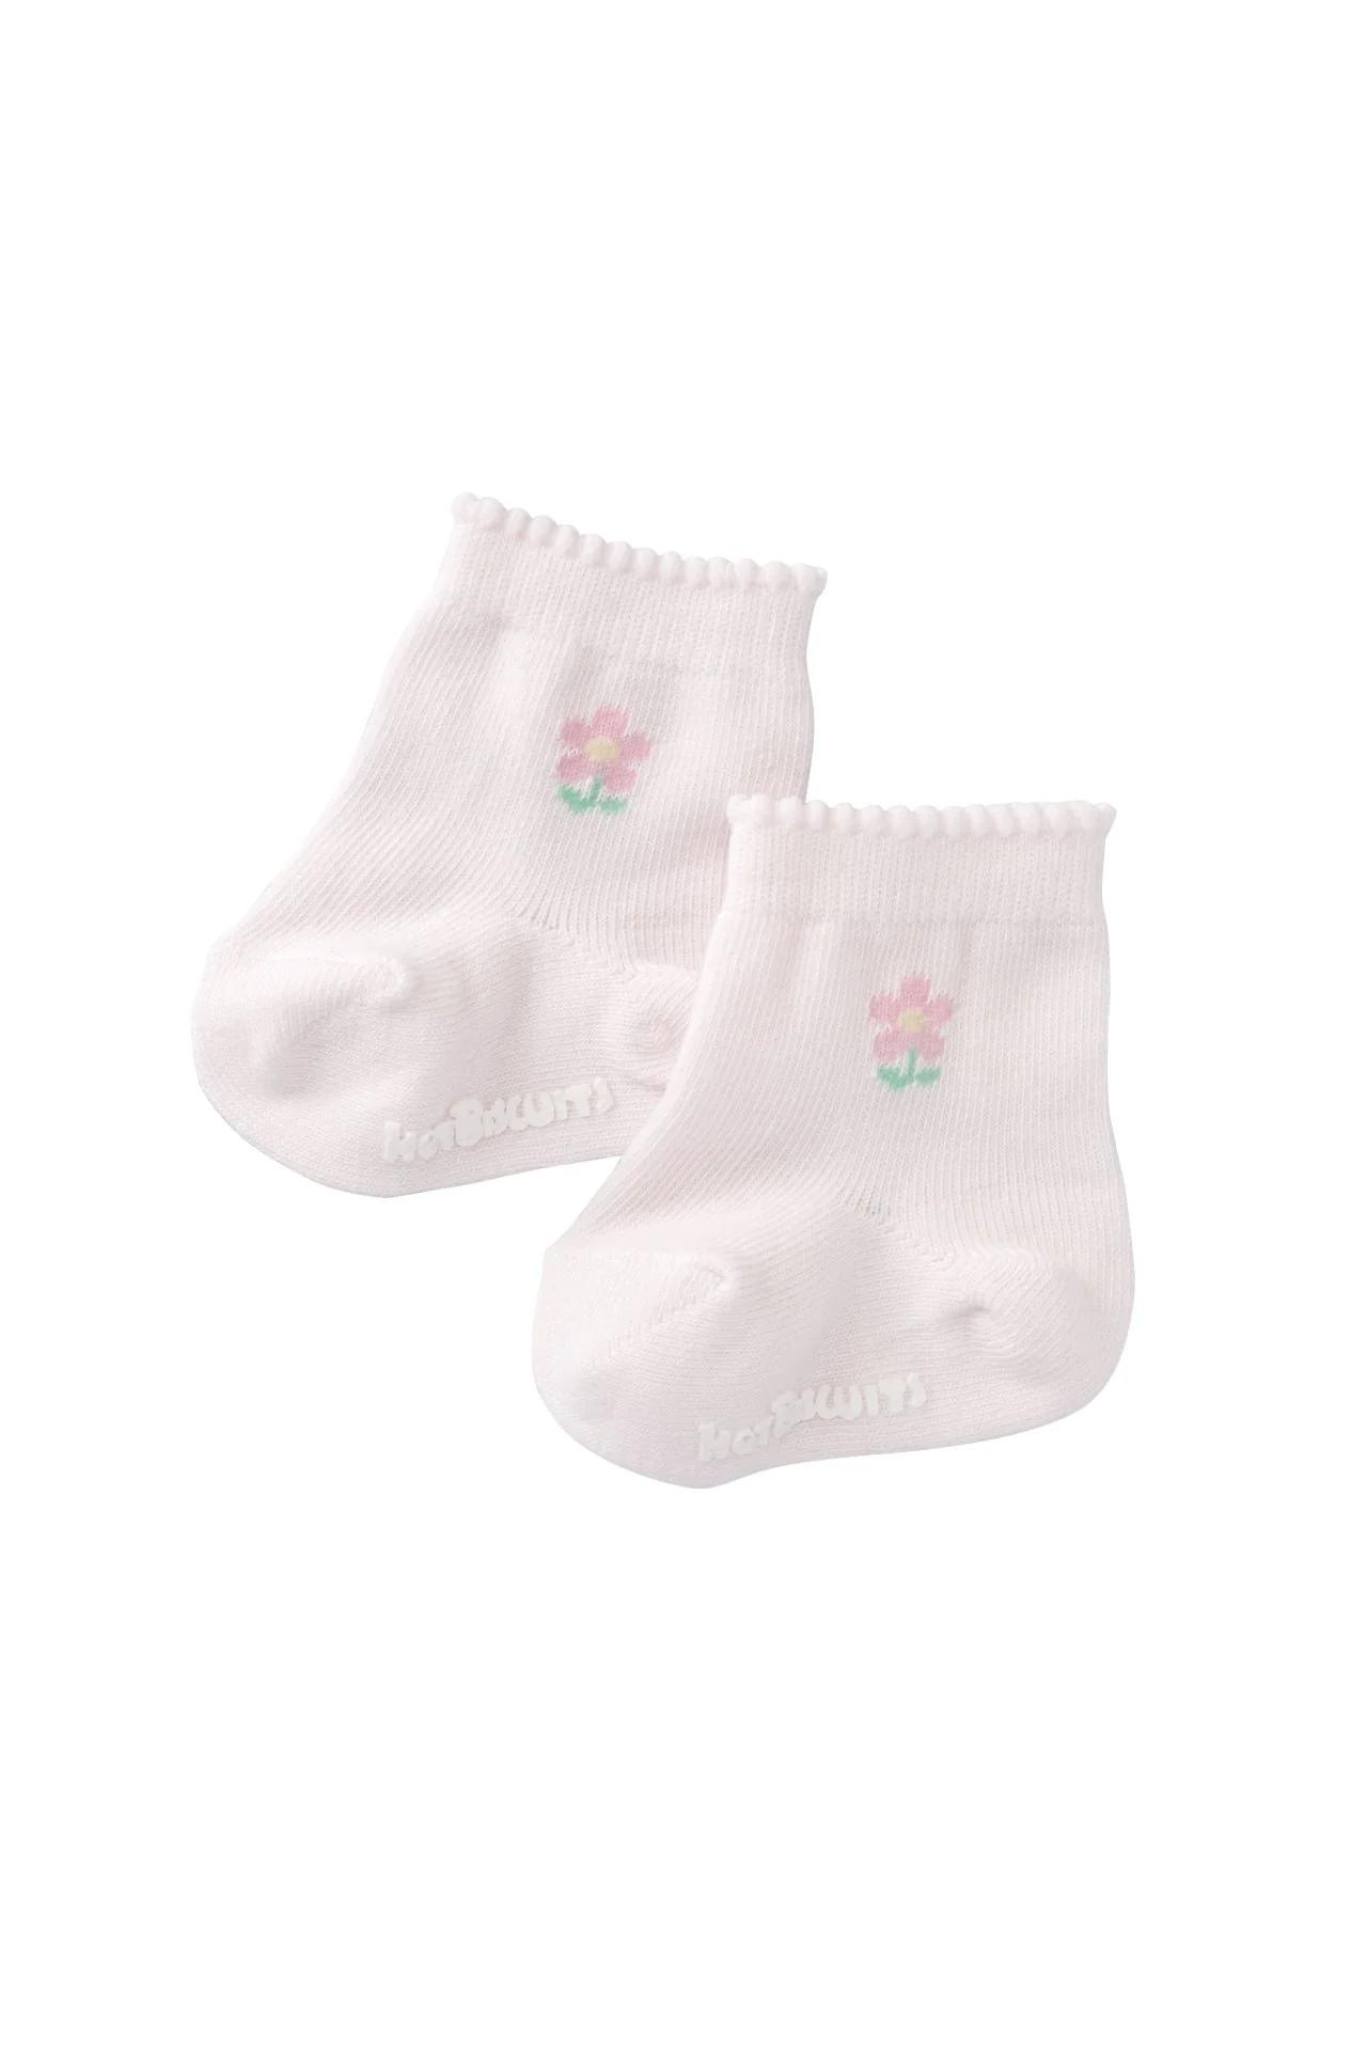 HB Floral Baby Socks